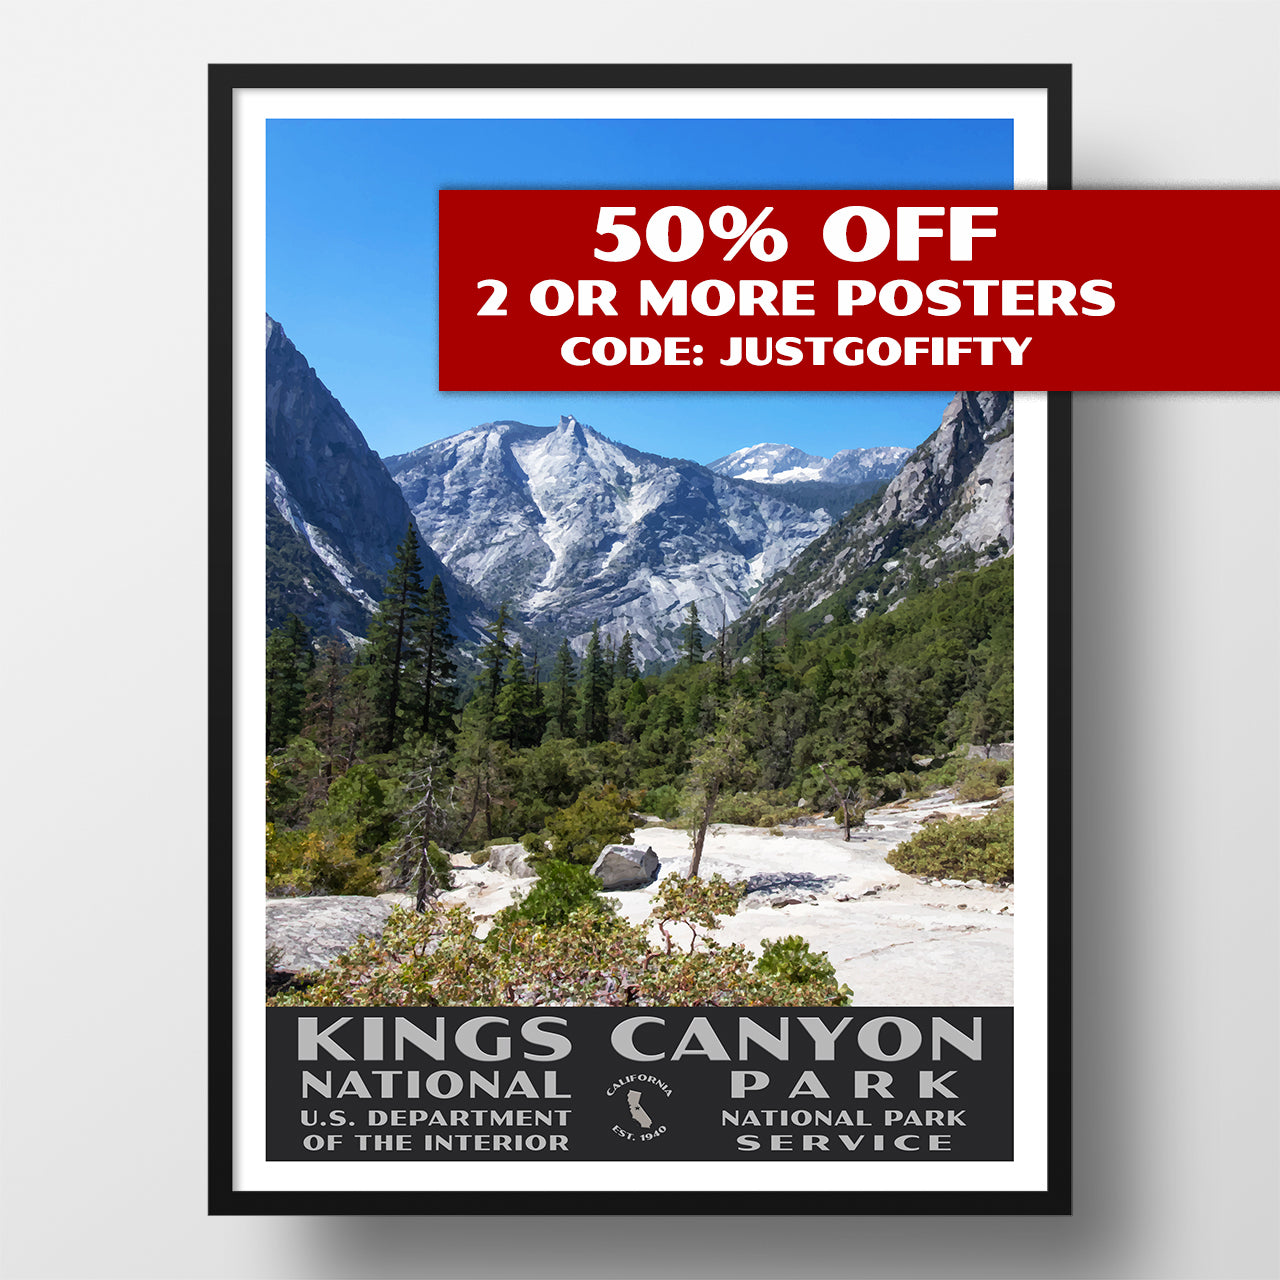 Kings Canyon national park poster